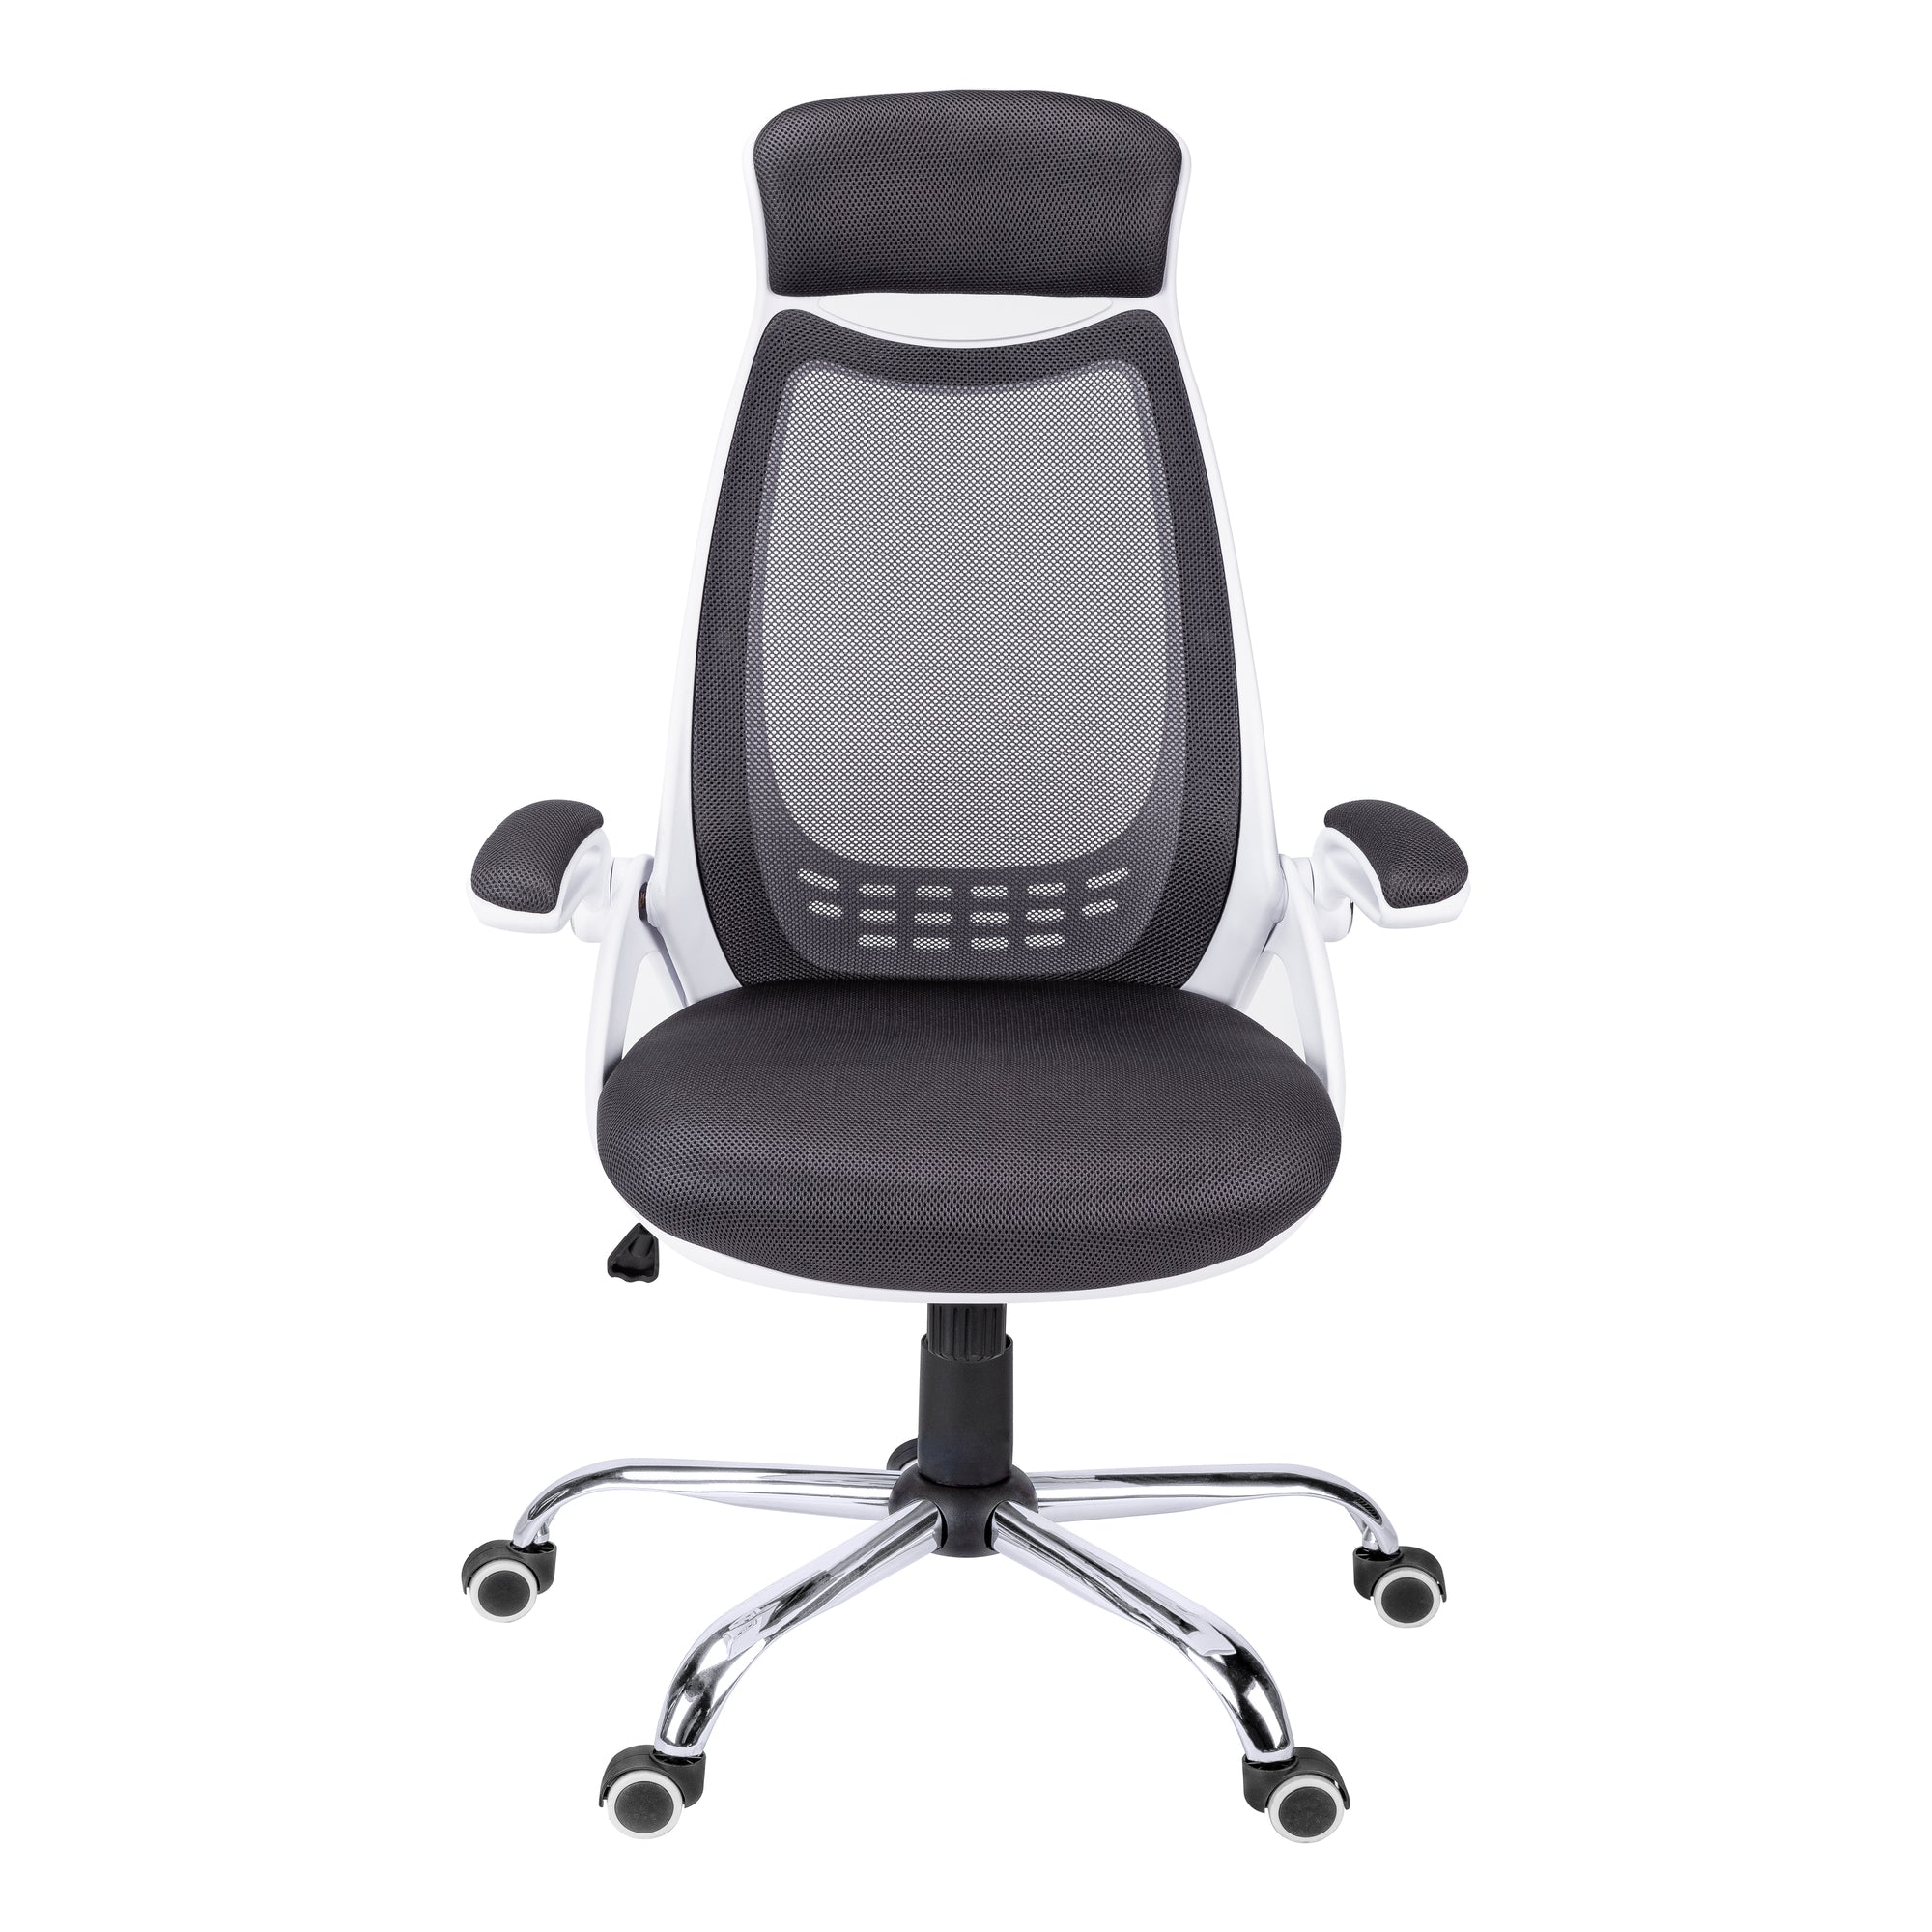 MN-817269    Office Chair, Adjustable Height, Swivel, Ergonomic, Armrests, Computer Desk, Office, Metal Base, Mesh, White, Grey, Chrome, Contemporary, Modern